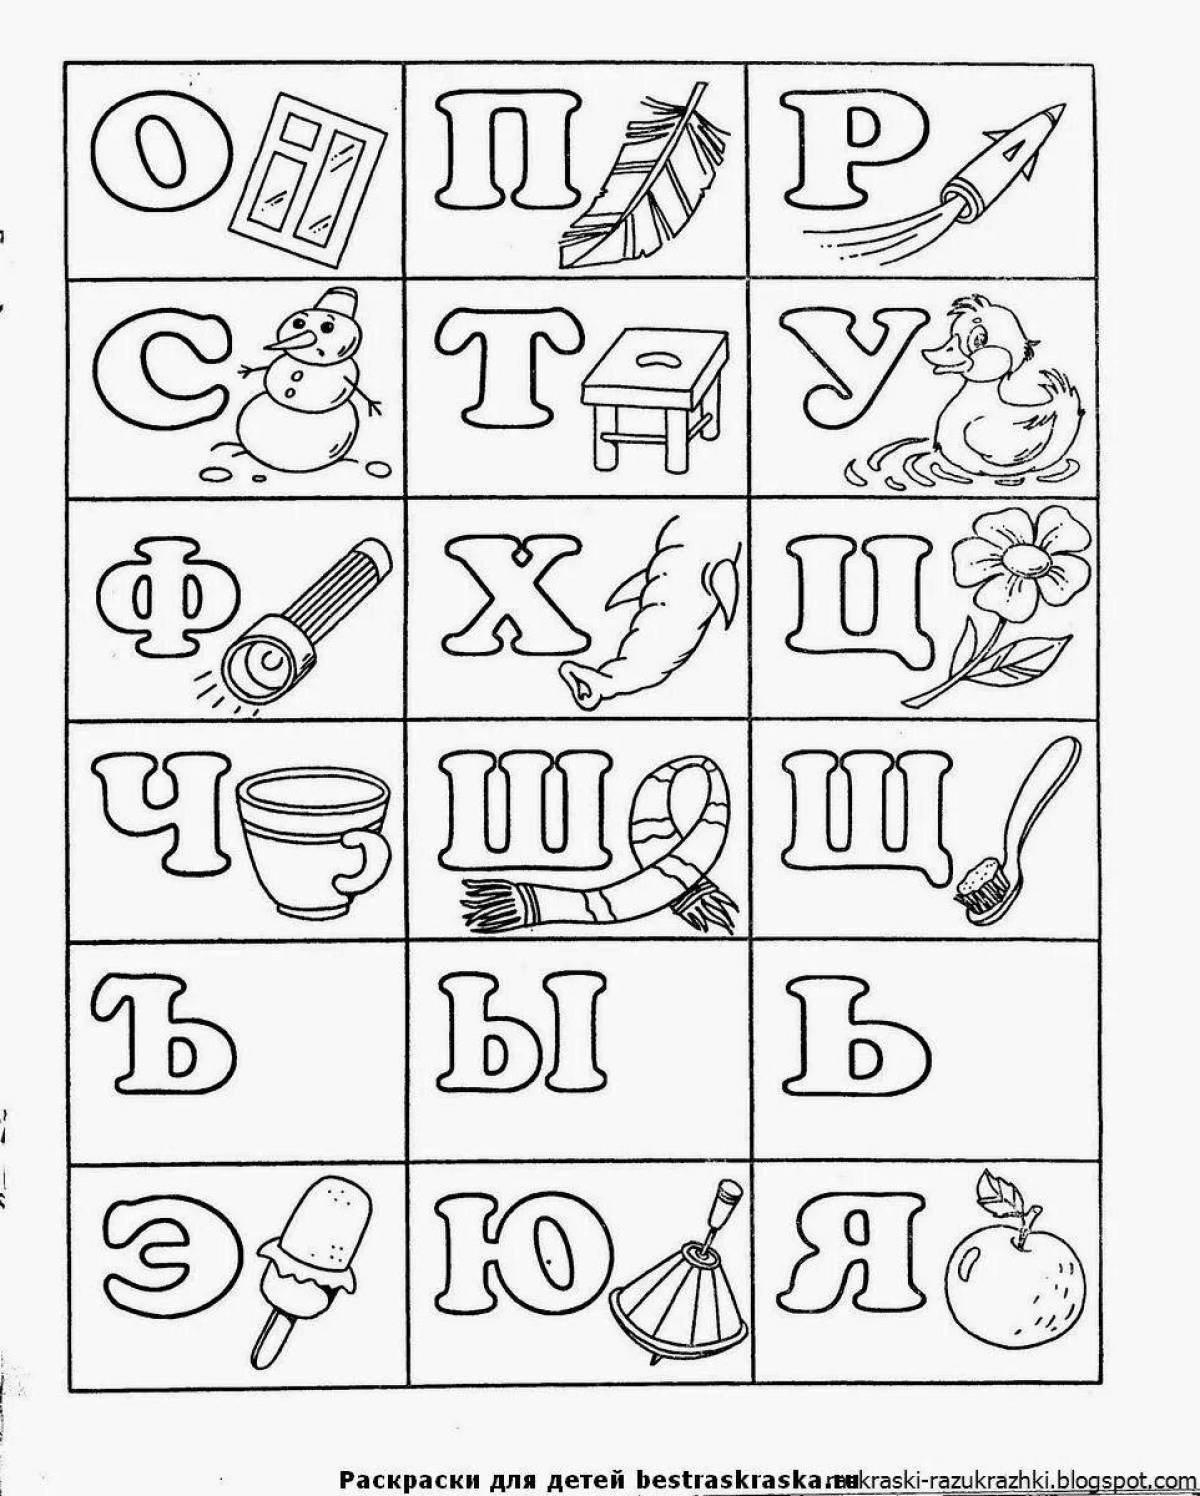 Amazing alphabet coloring book